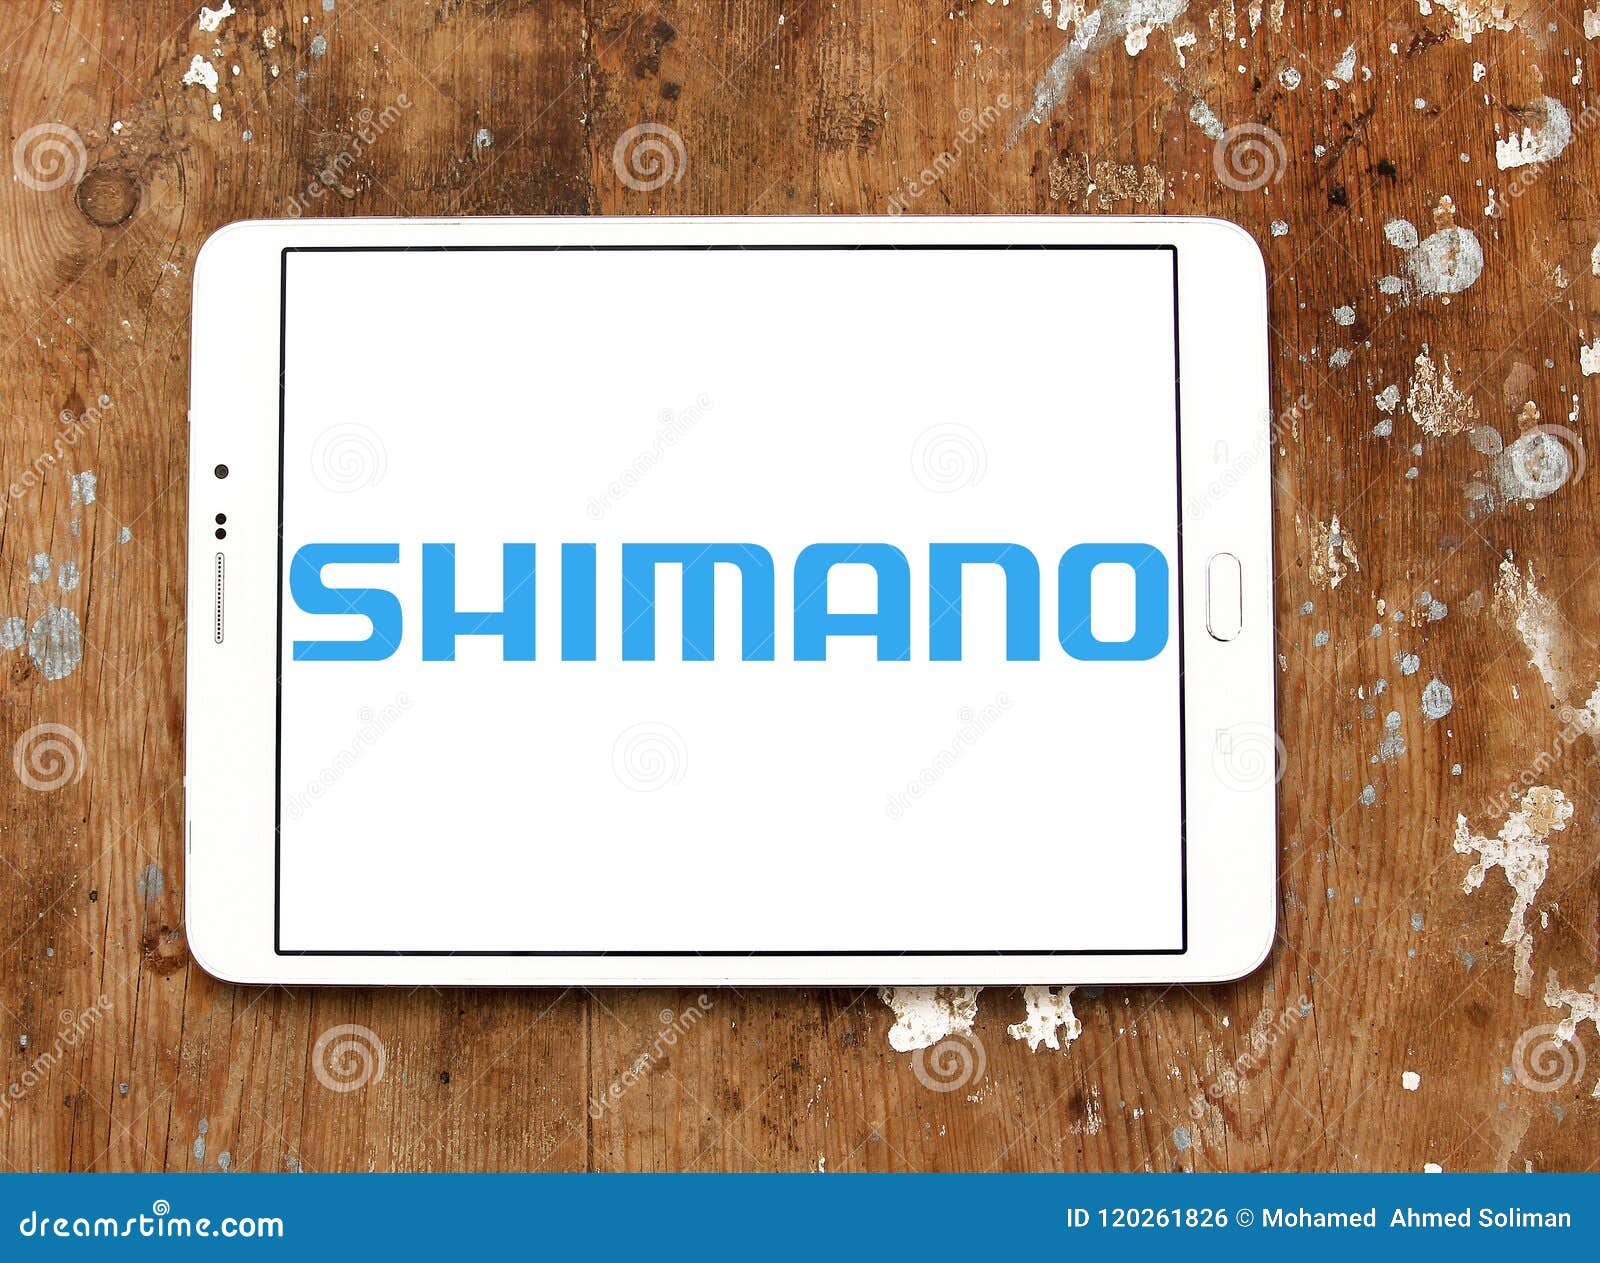 Shimano Logo Stock Photos - Free & Royalty-Free Stock Photos from